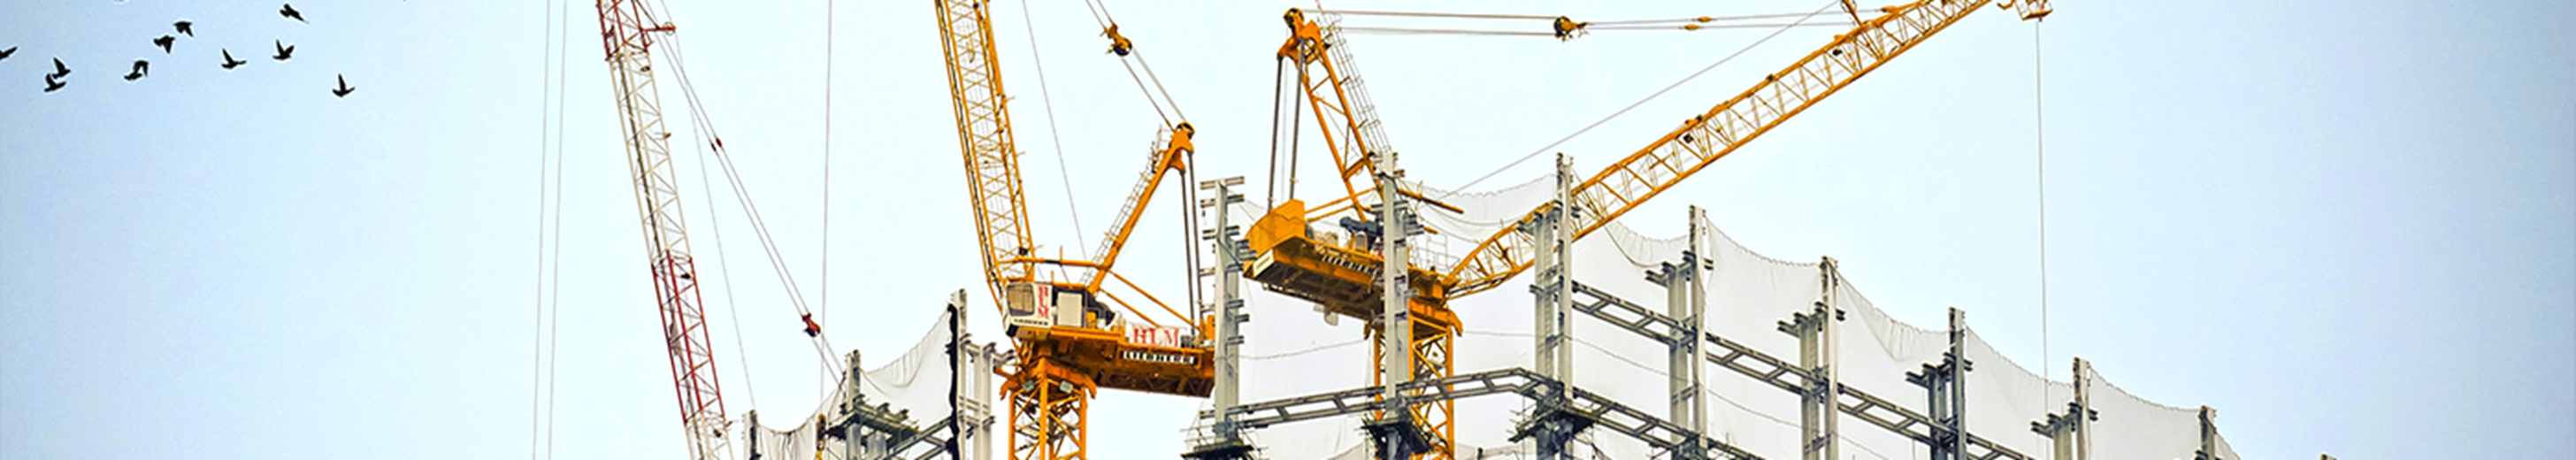 Cranes on a construction site 